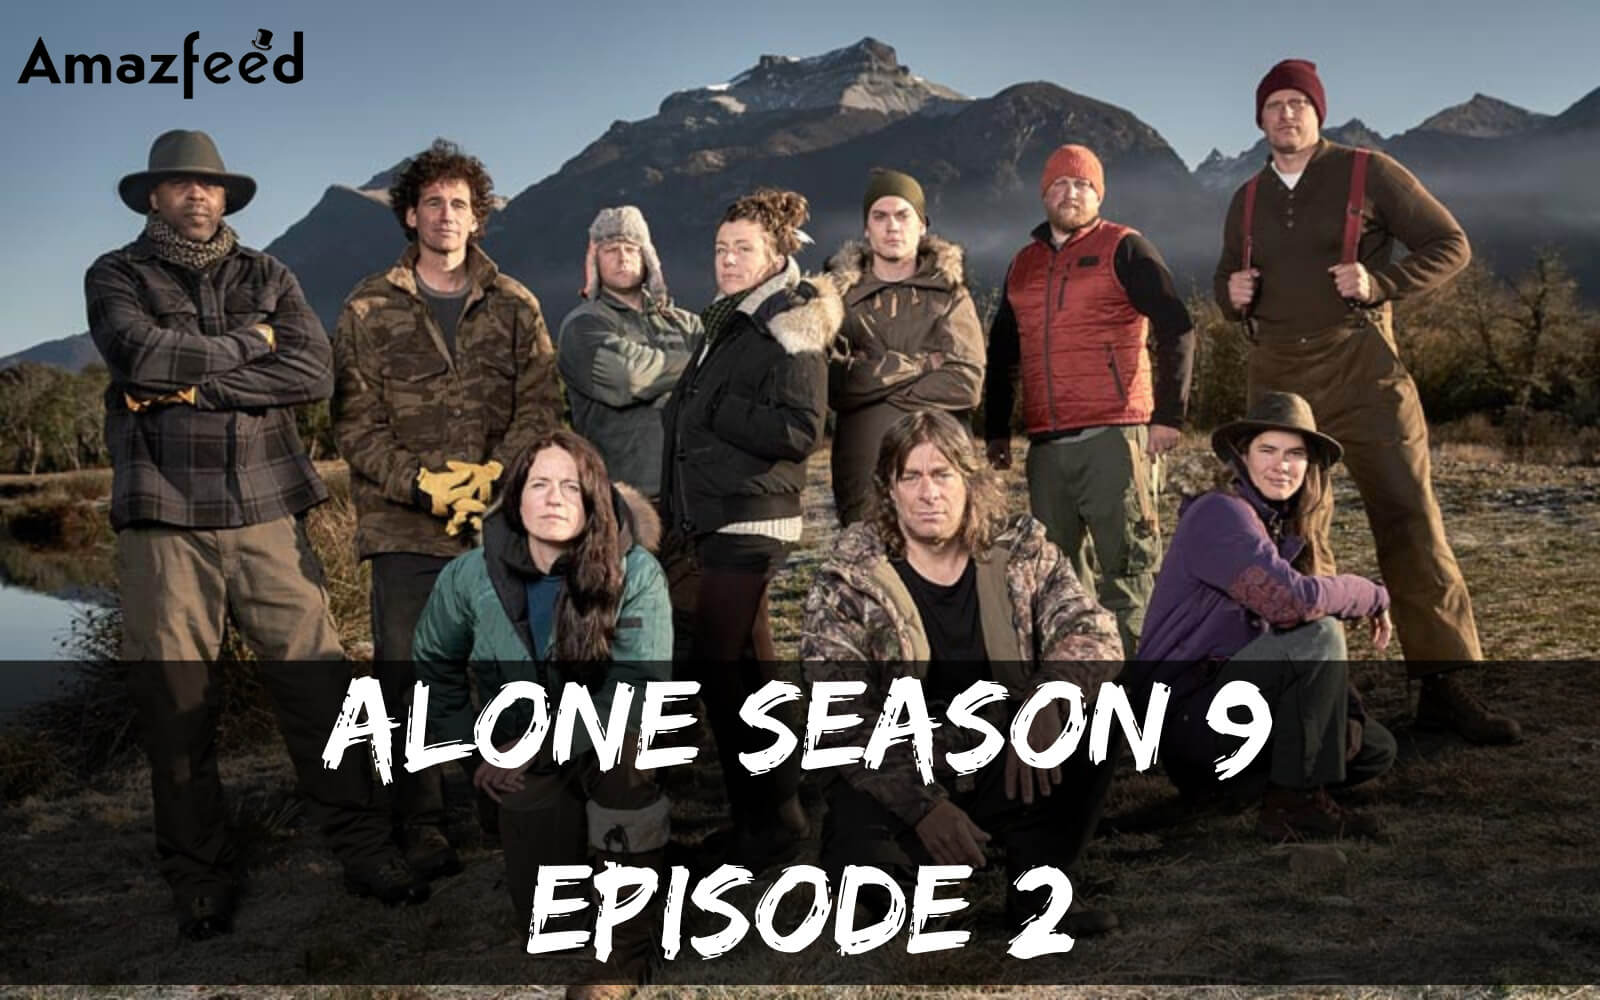 Alone Season 9 episode 2 cast - Copy